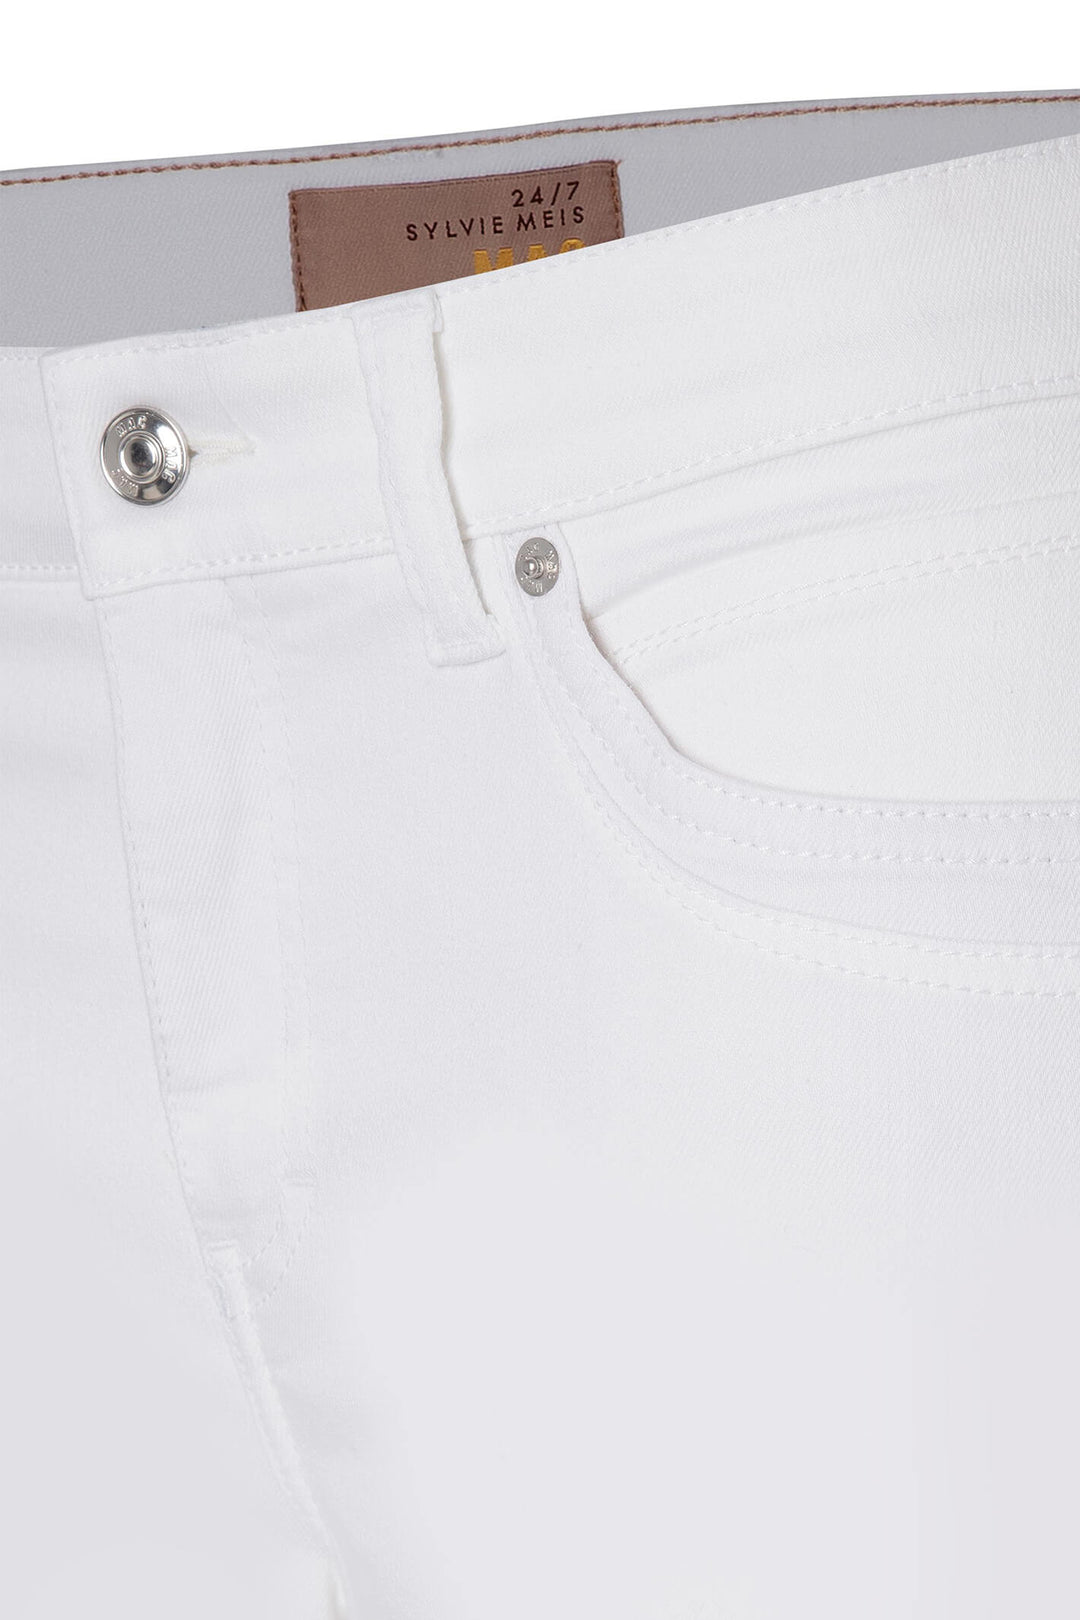 MAC Mel 2620-90-0389L D010 White Denim Jeans - Olivia Grace Fashion